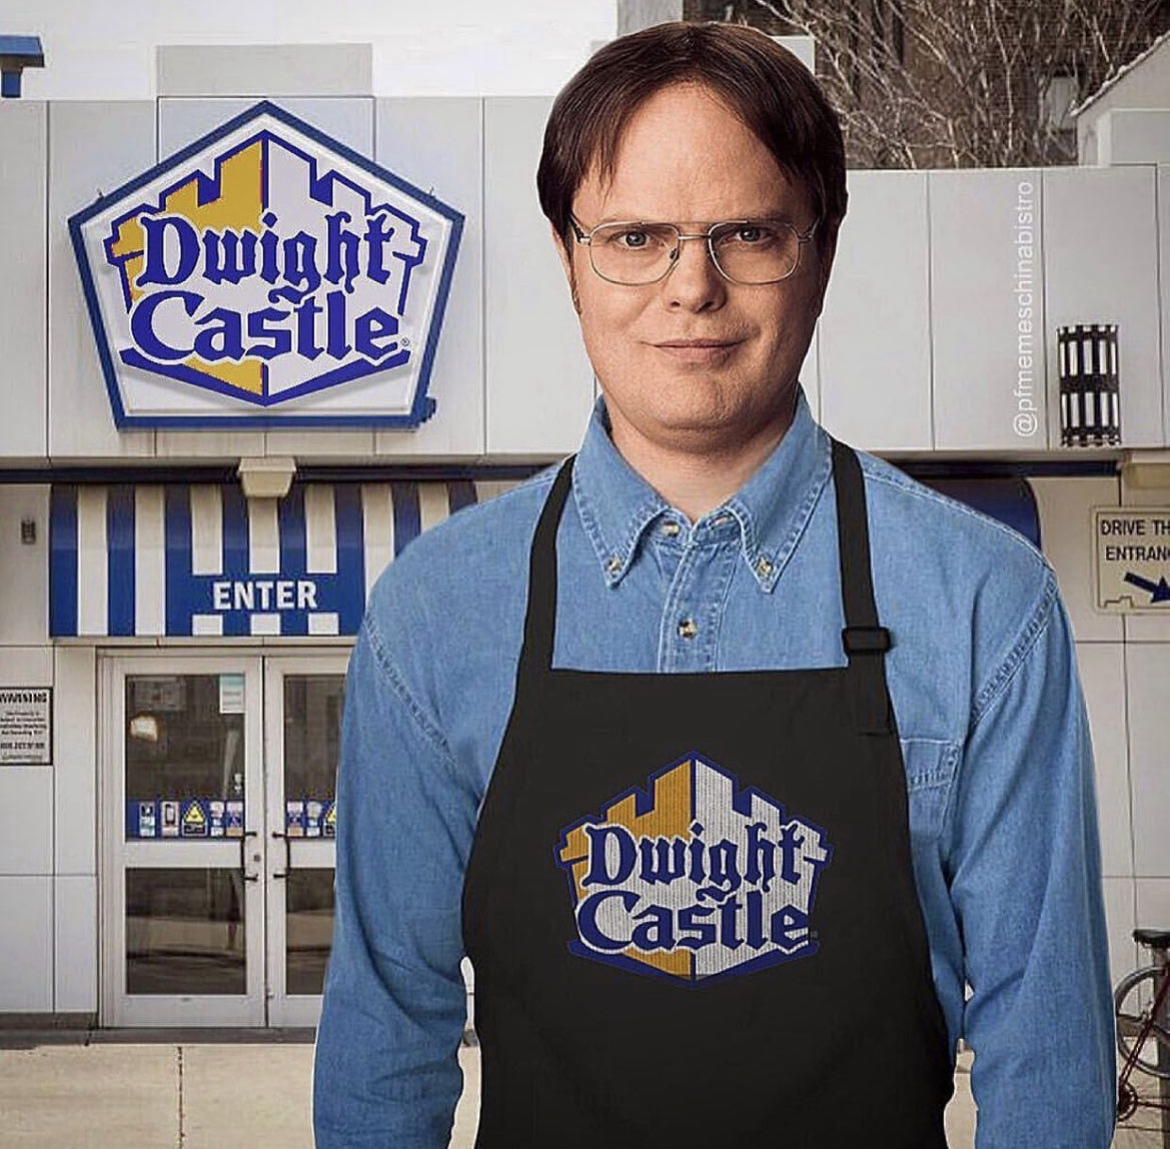 PFMemesChinaBistro Memes - Math Dwight Castle Enter Dwight Castle pfmemaschinabistro Noakhirages Drive The Entran